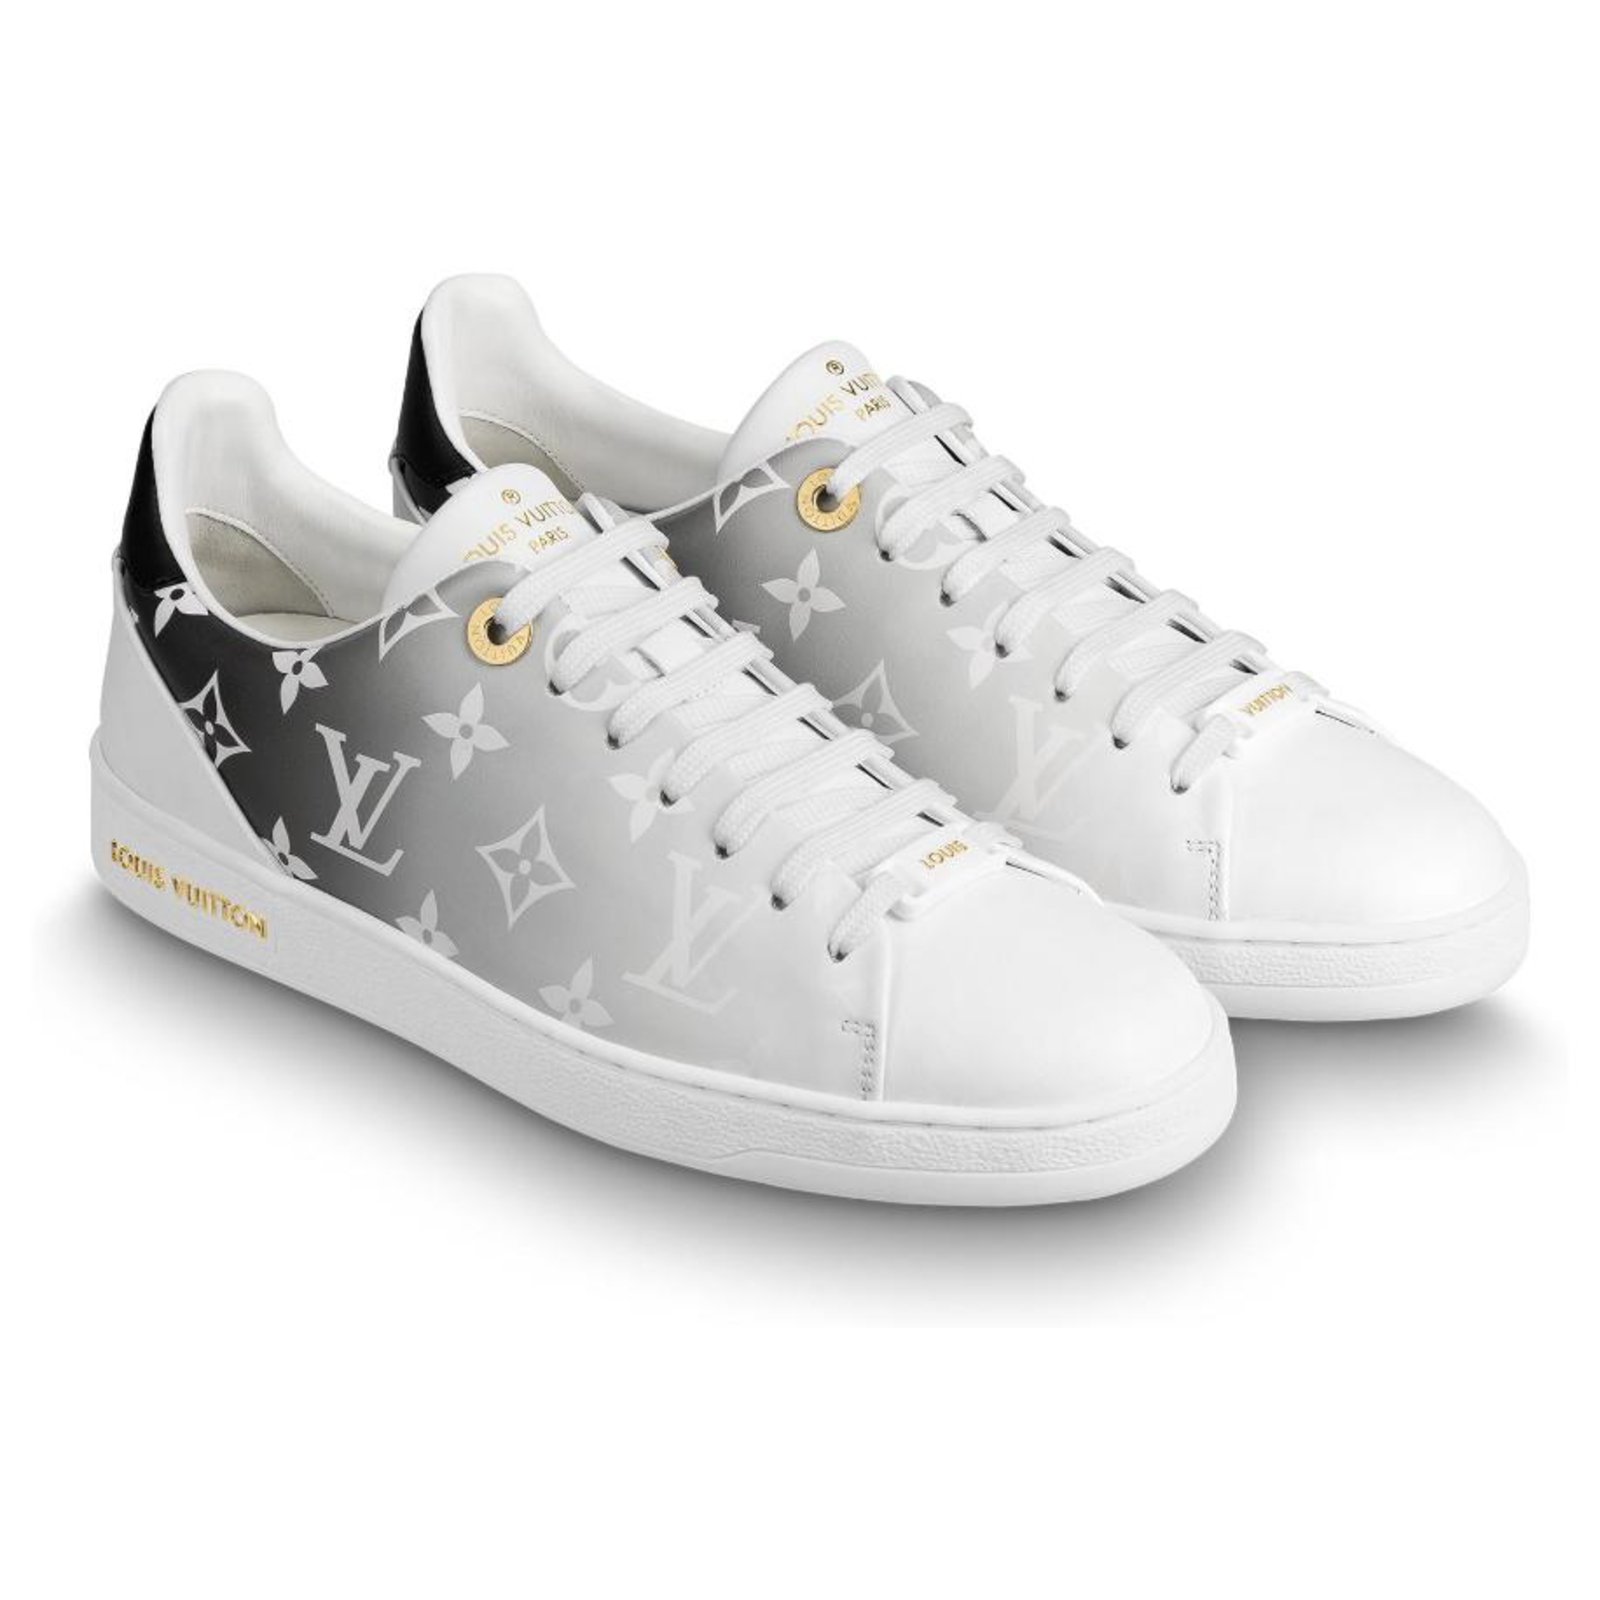 LOUIS VUITTON FRONT Row Monogram Trainers Sneakers - Size EU36 / UK 3  £169.99 - PicClick UK